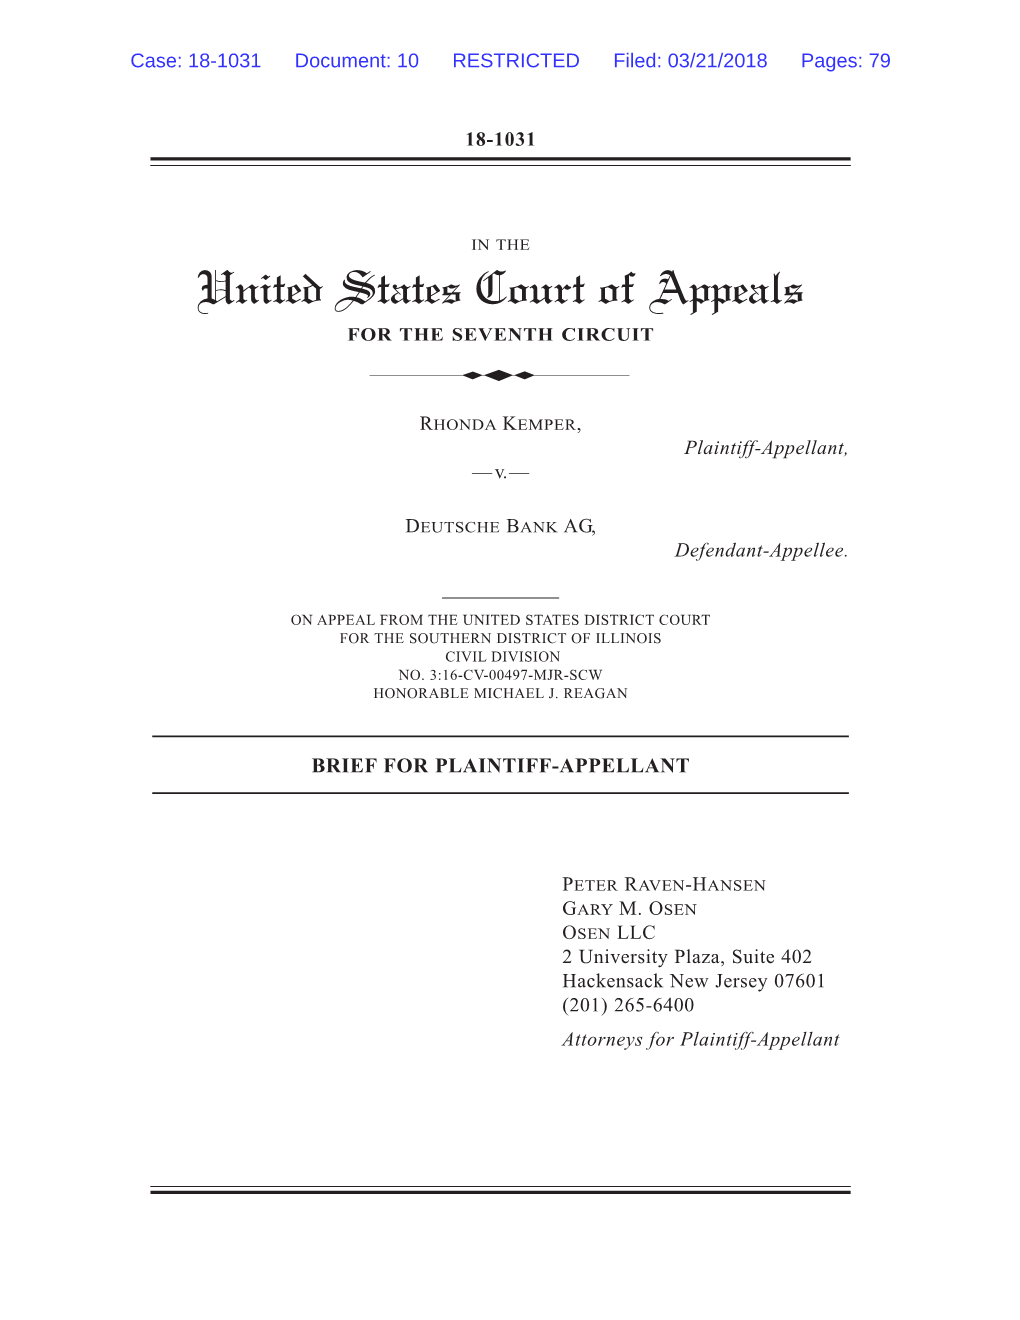 Brief for Plaintiff-Appellant -- Kemper V